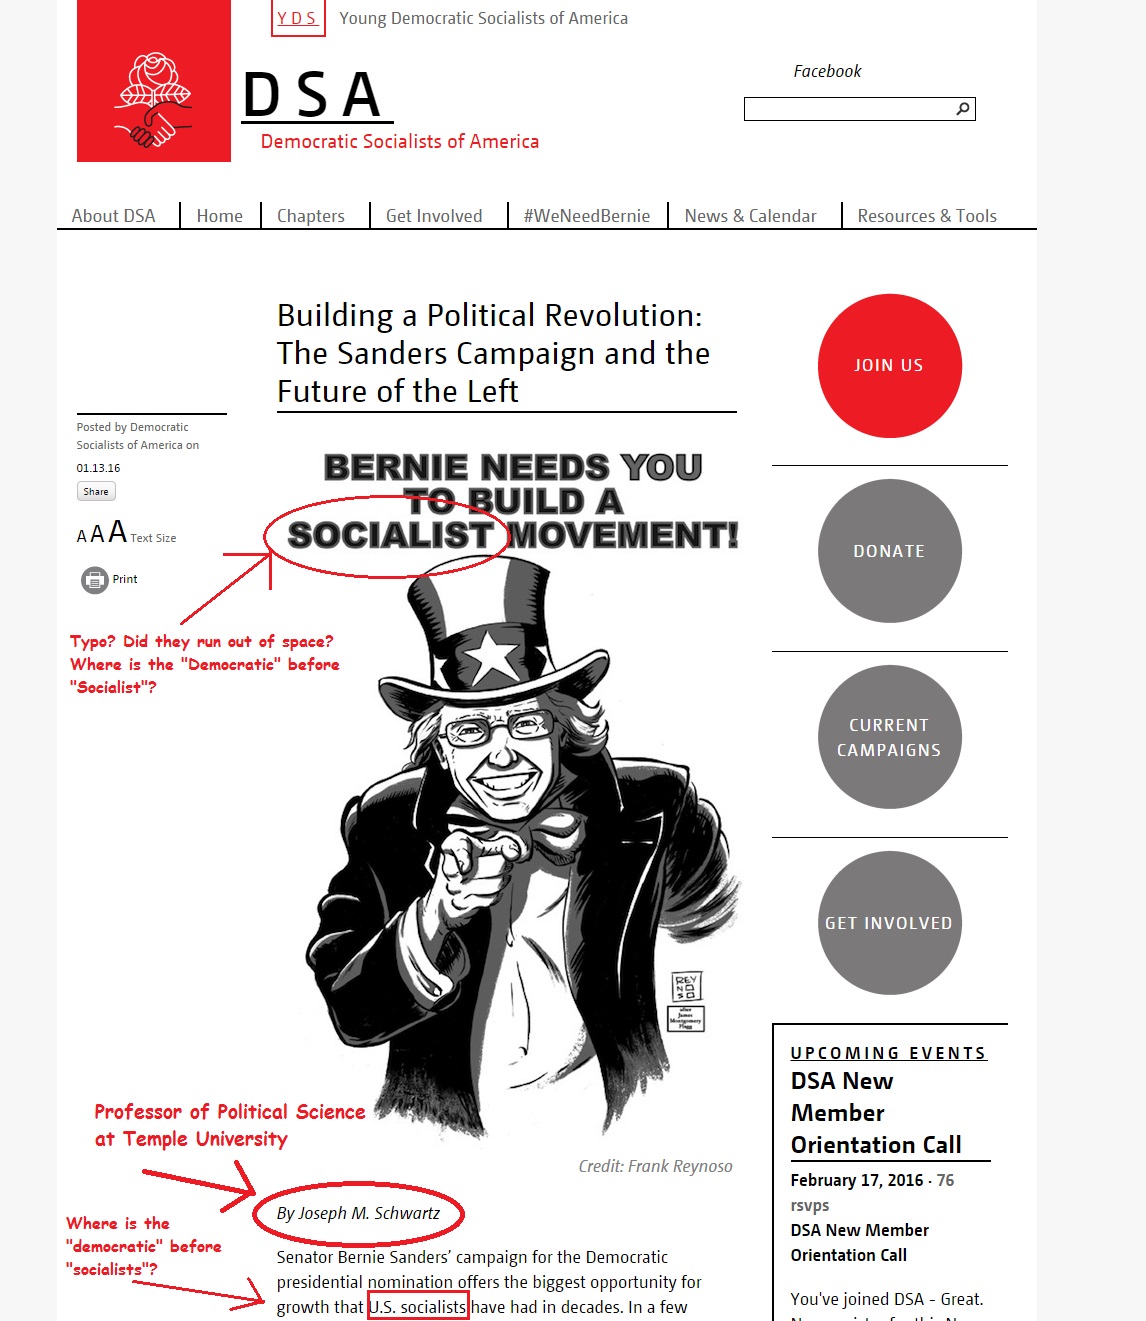 Screenshot at Democratic Socialists of America website retrieved Feb. 16, 2016